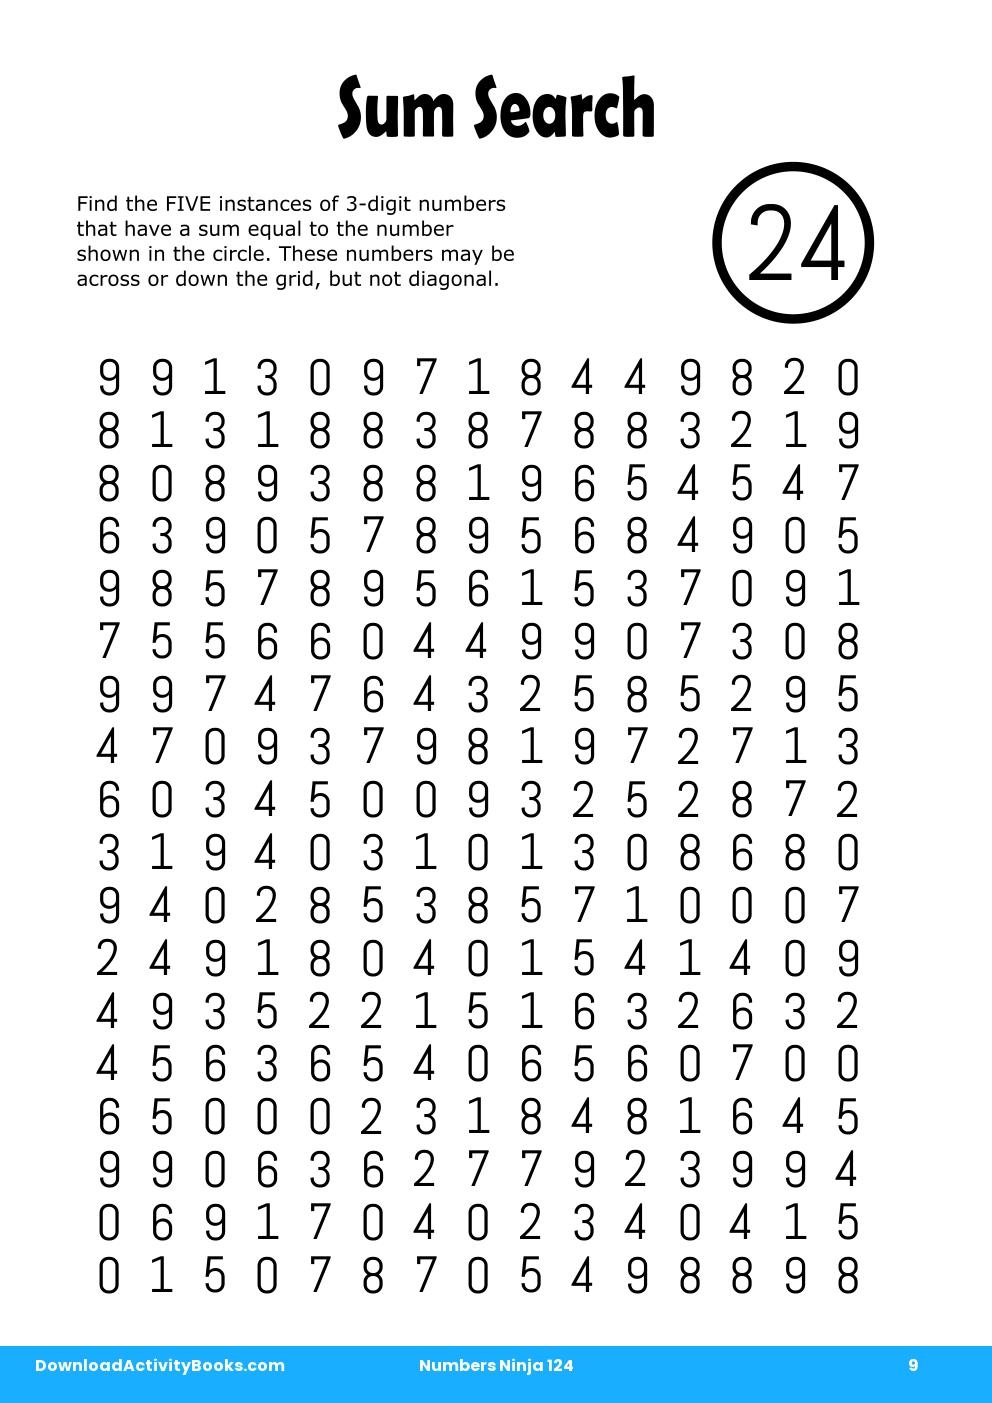 Sum Search in Numbers Ninja 124